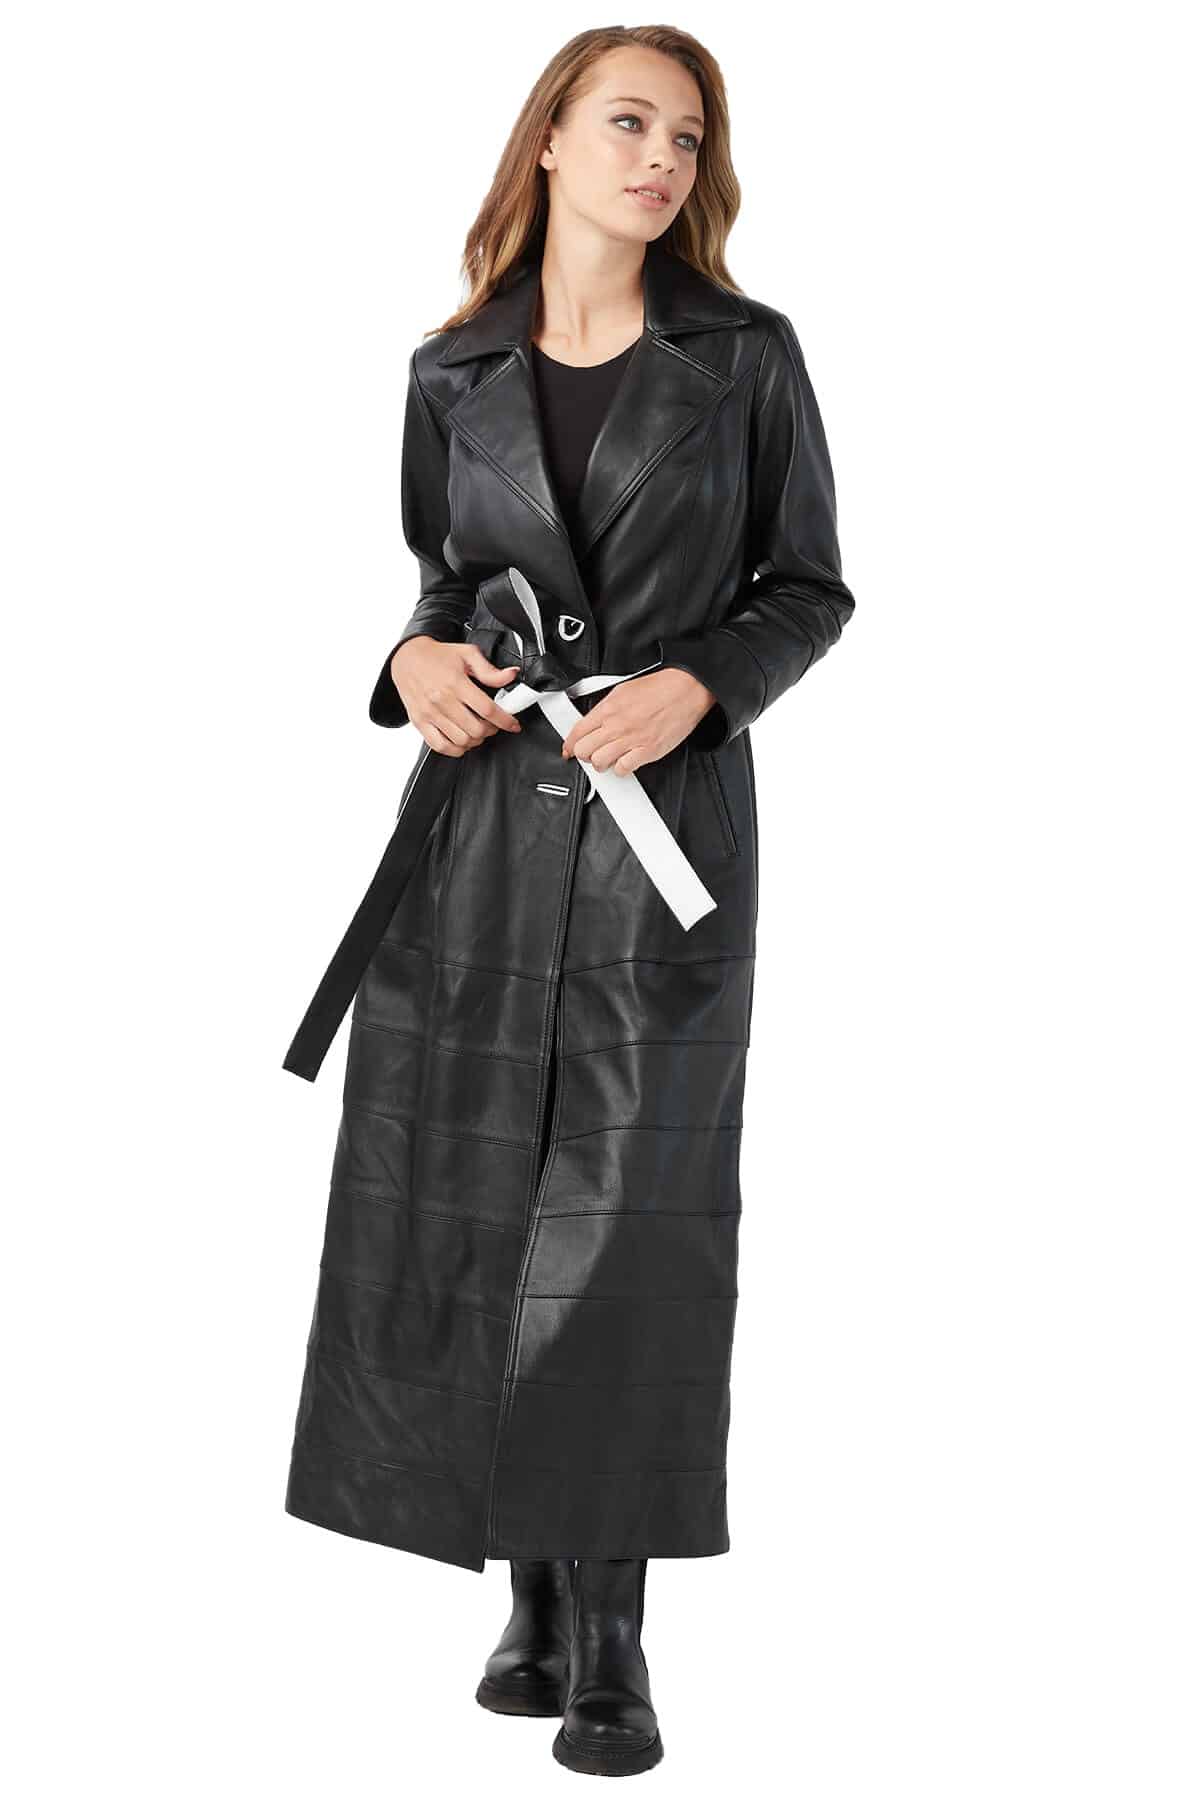 rita-genuine-leather-womens-topcoat-black-2